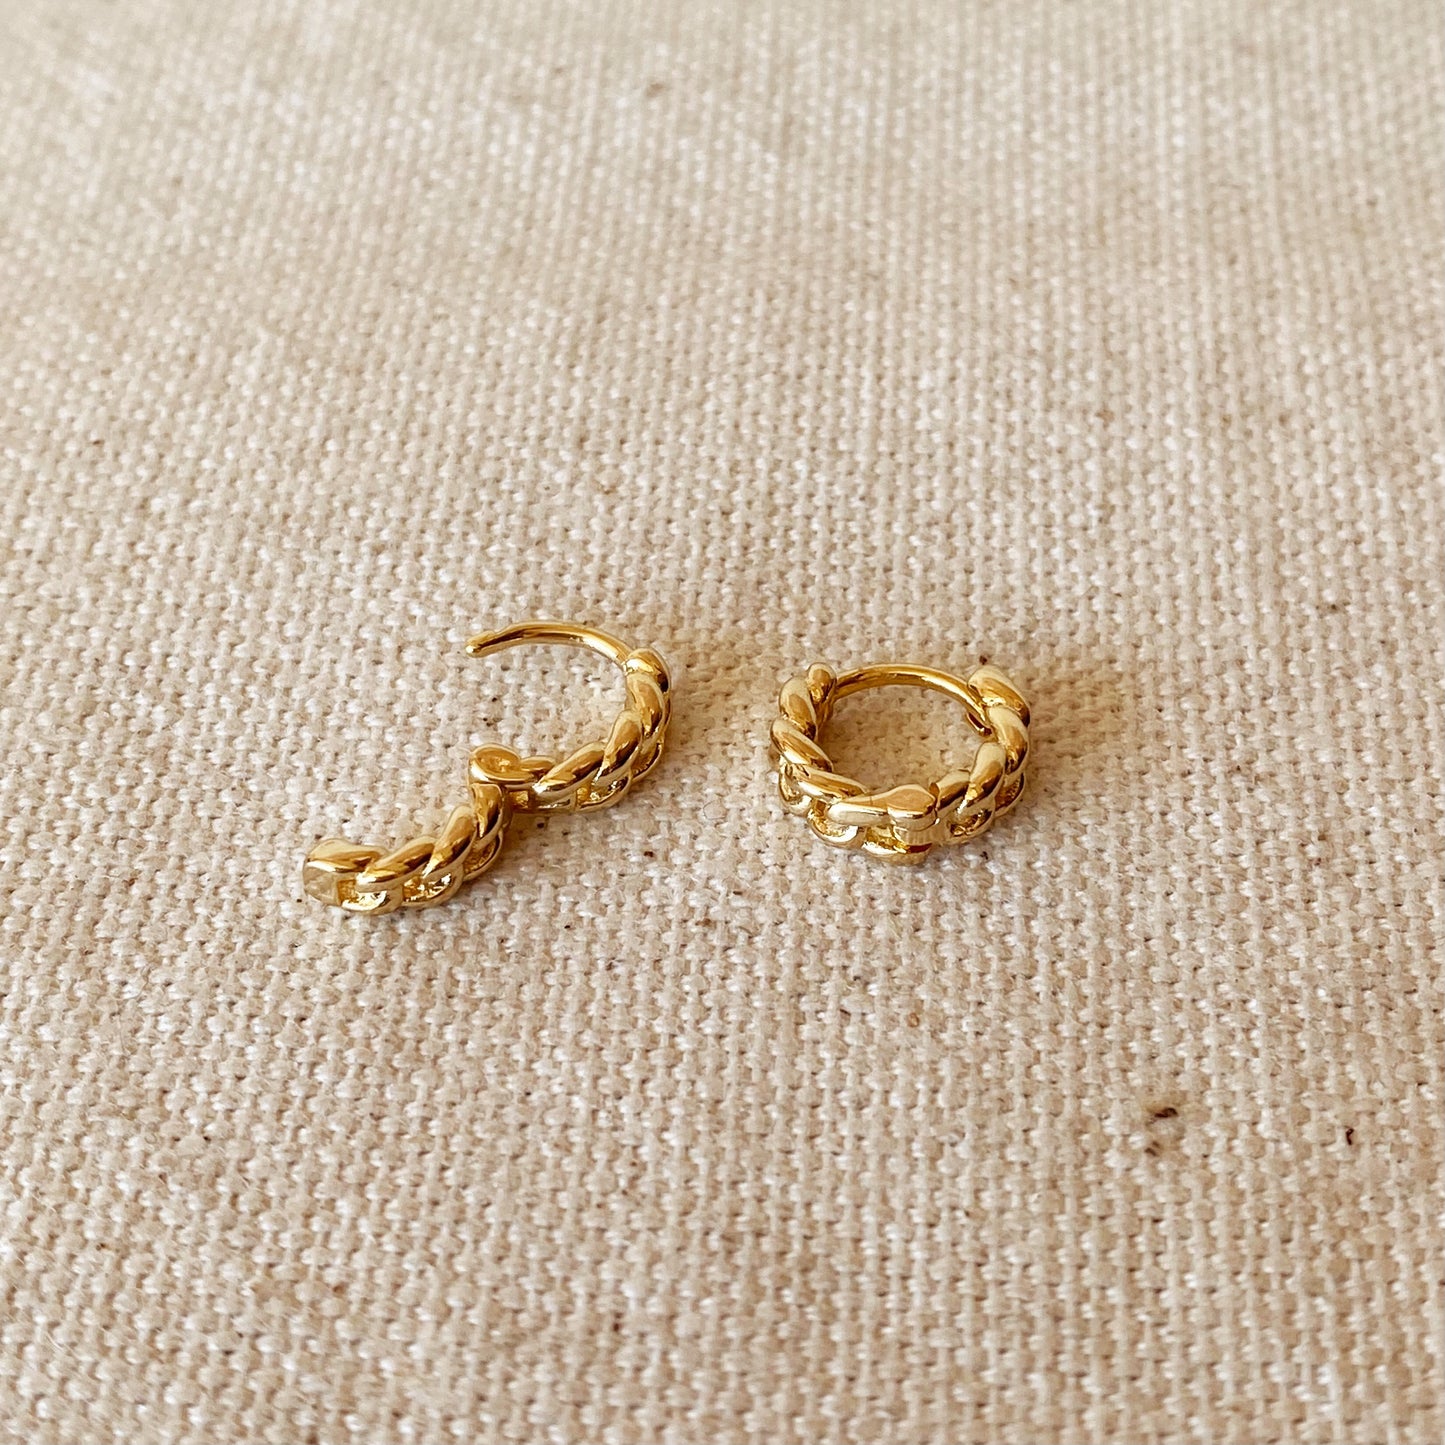 GoldFi 18k Gold Filled 2mm Cuban Chain Clicker Hoop Earring